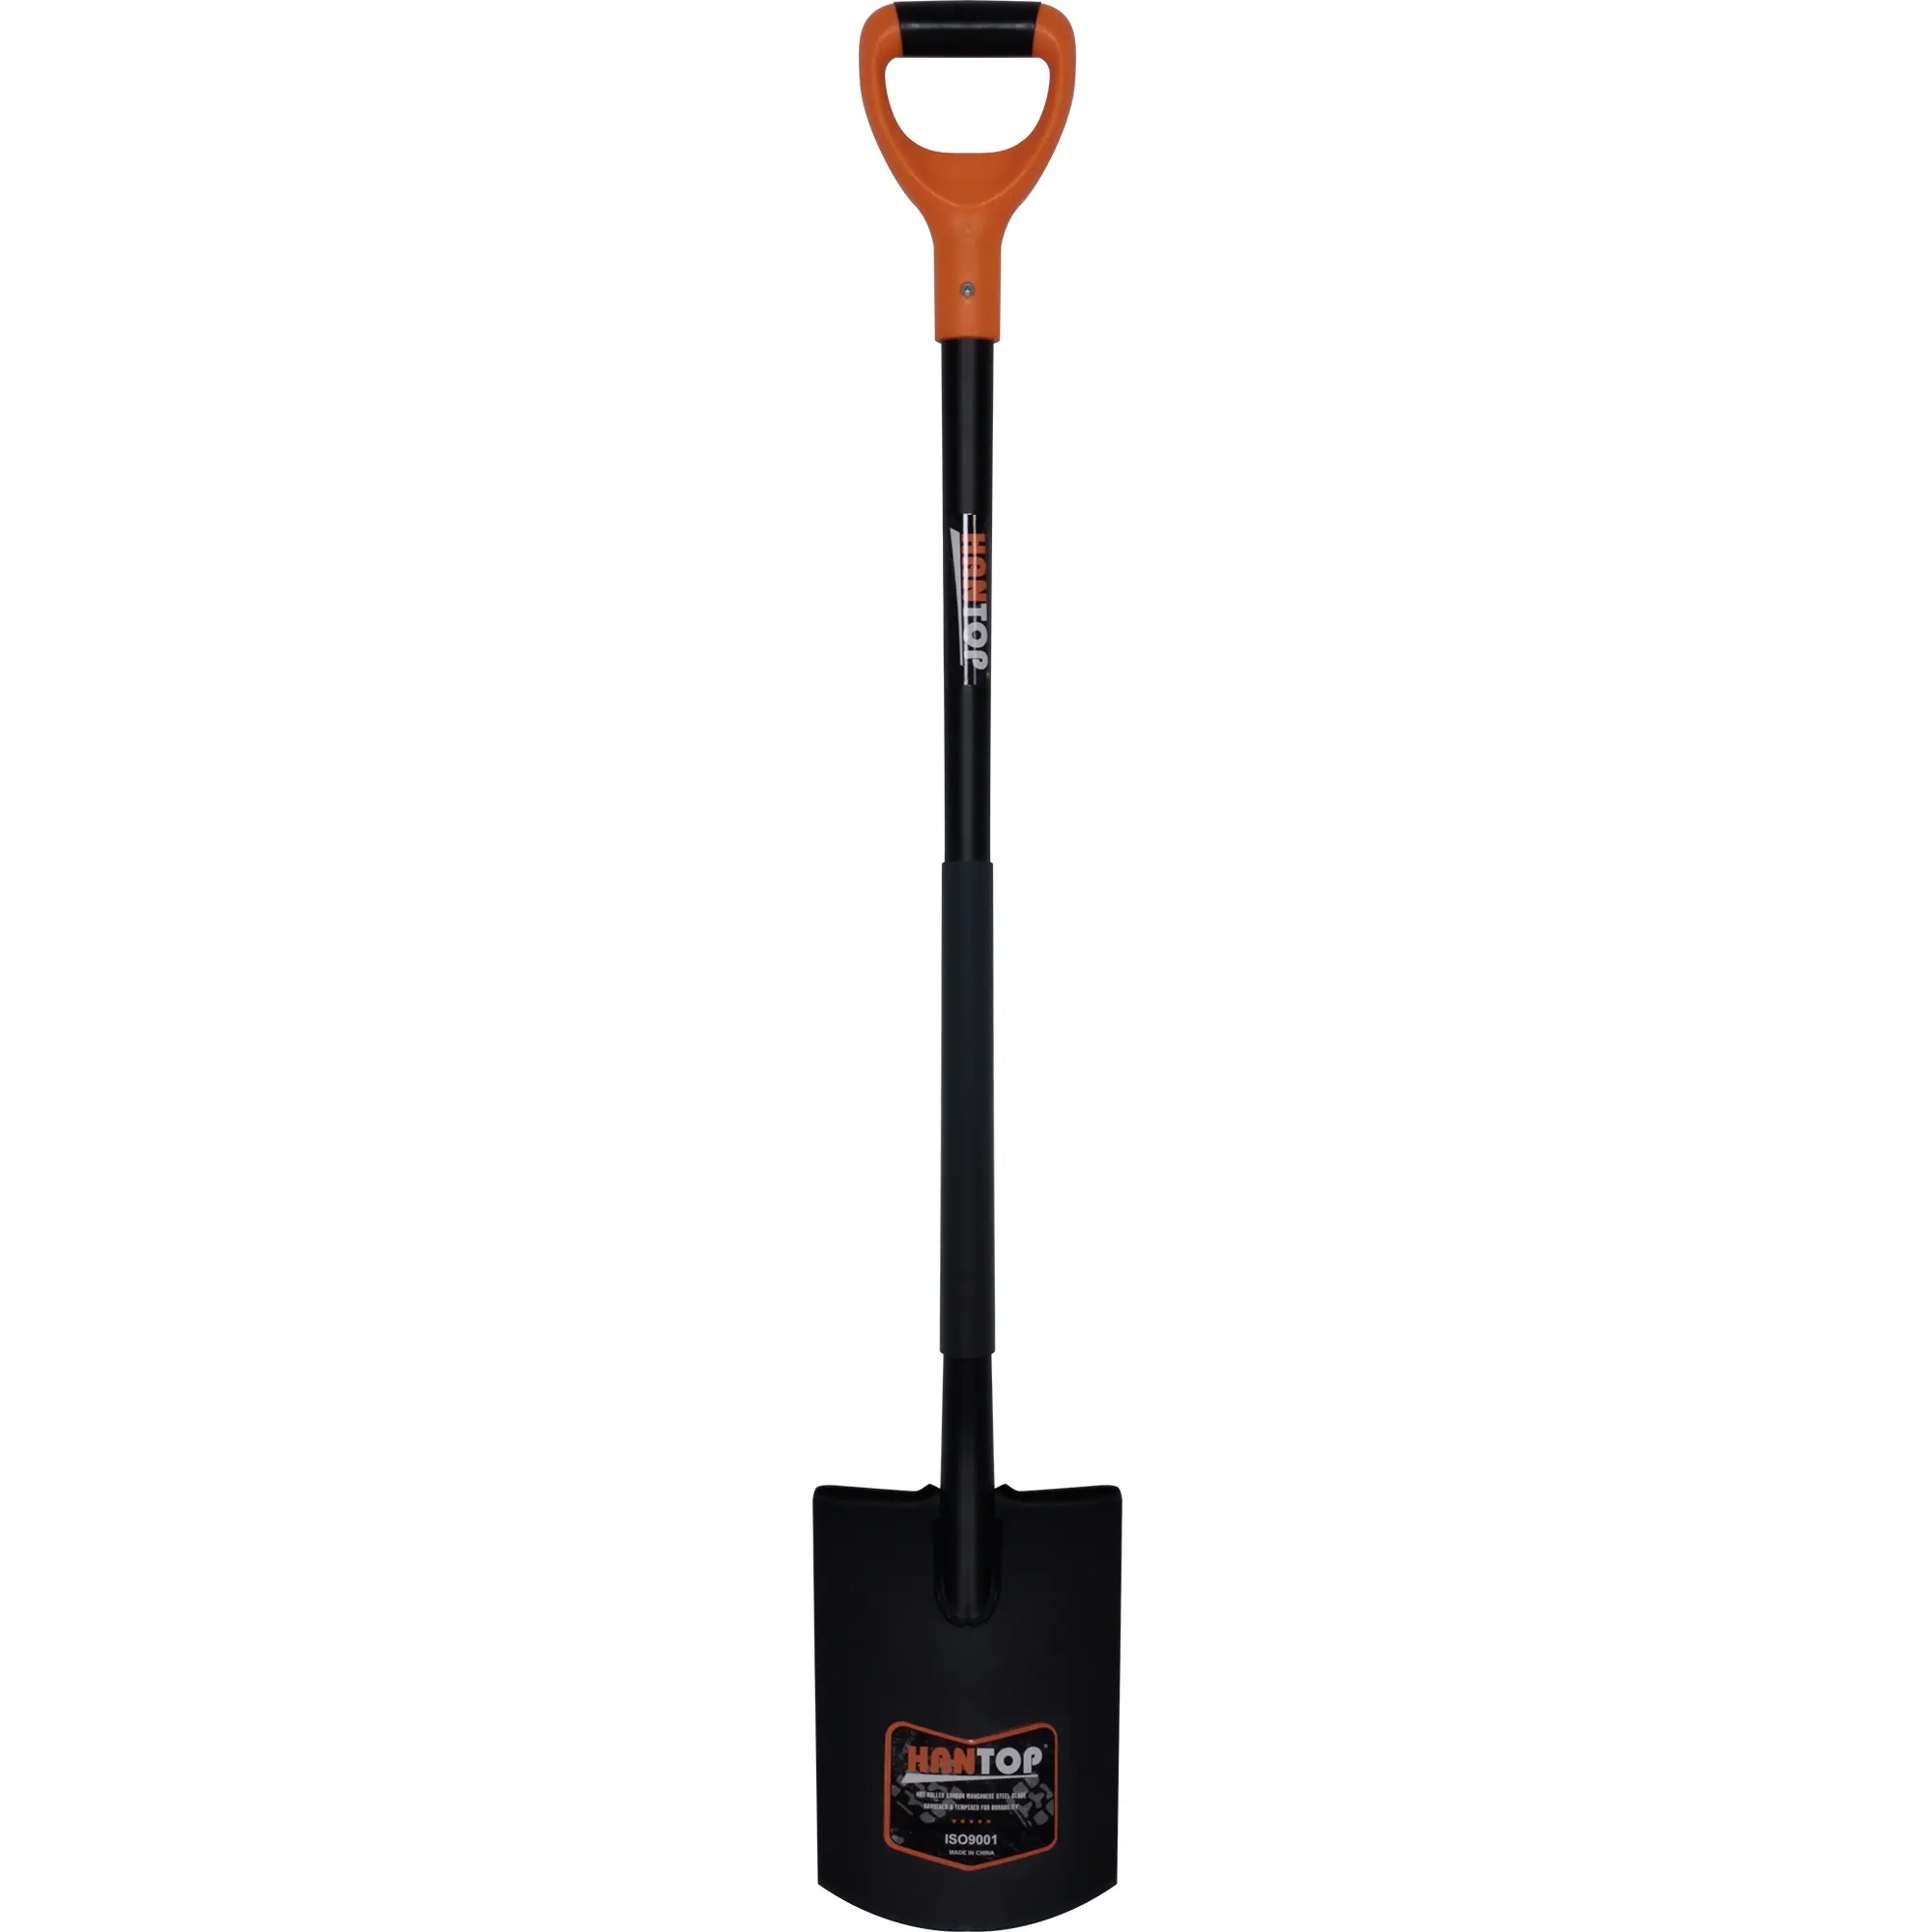 21801 Factory directly sales high quality ergonomics fiskars shovel all metal handle European type